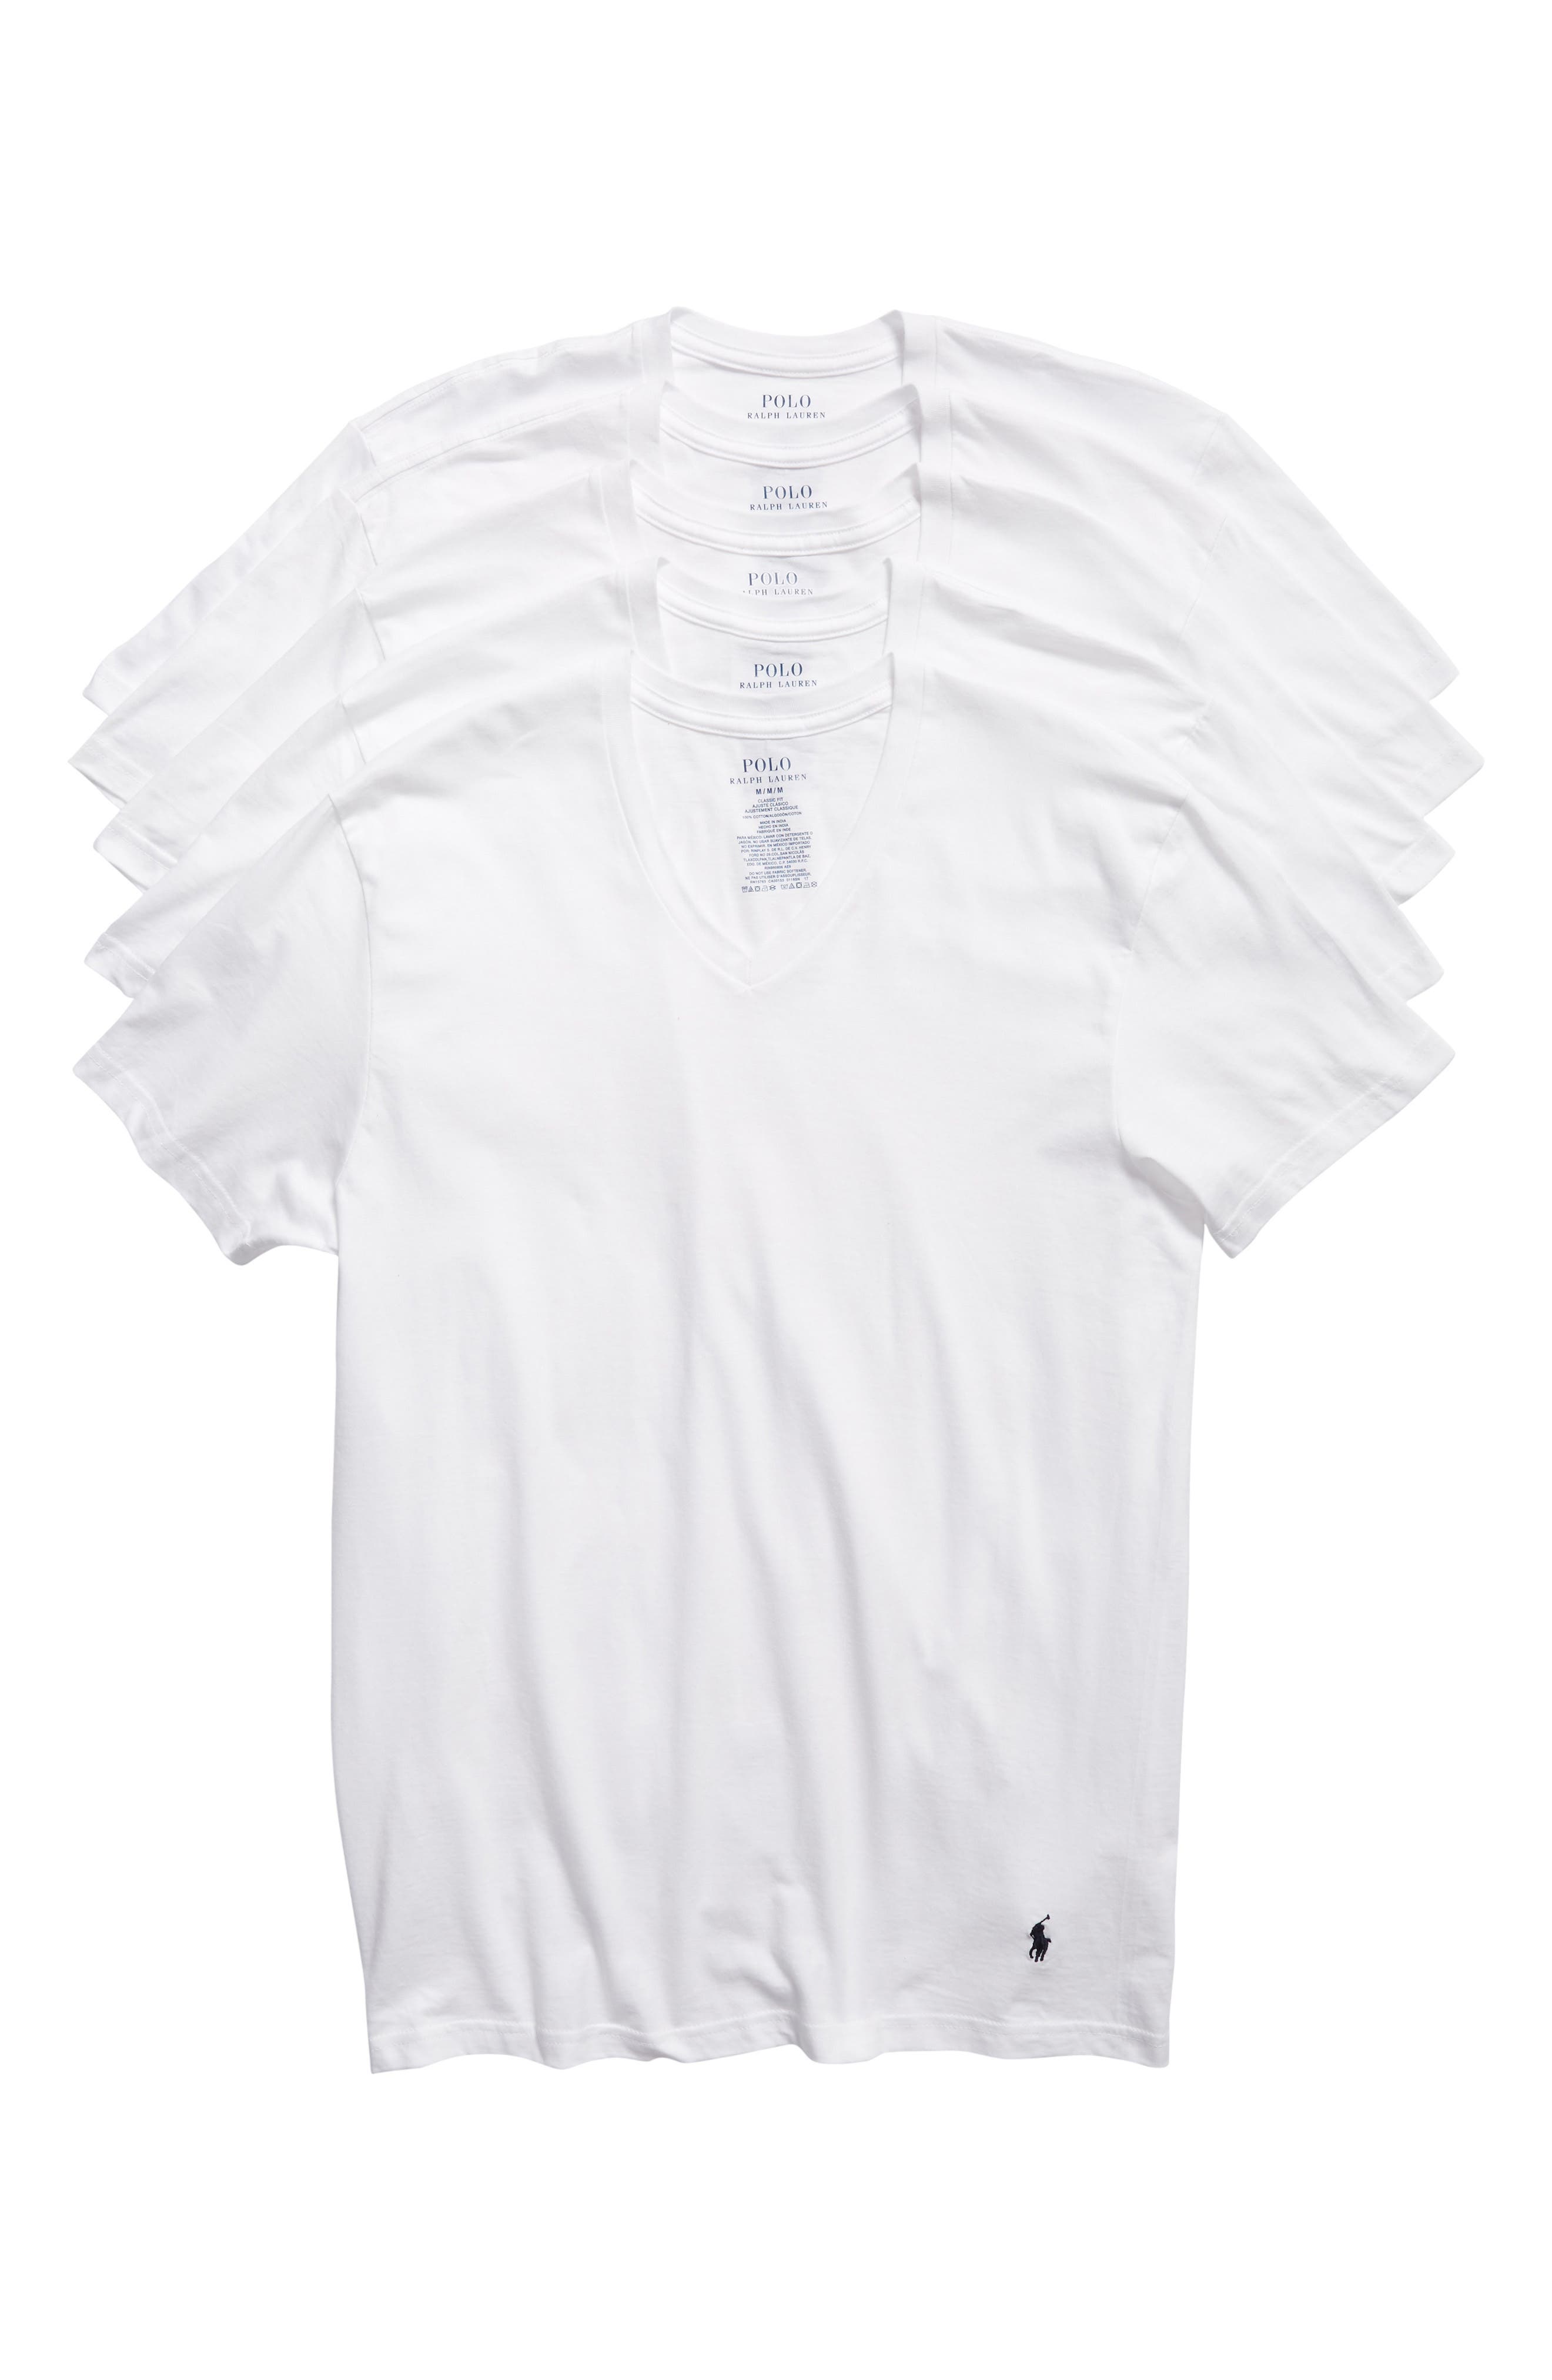 polo ralph lauren white shirts